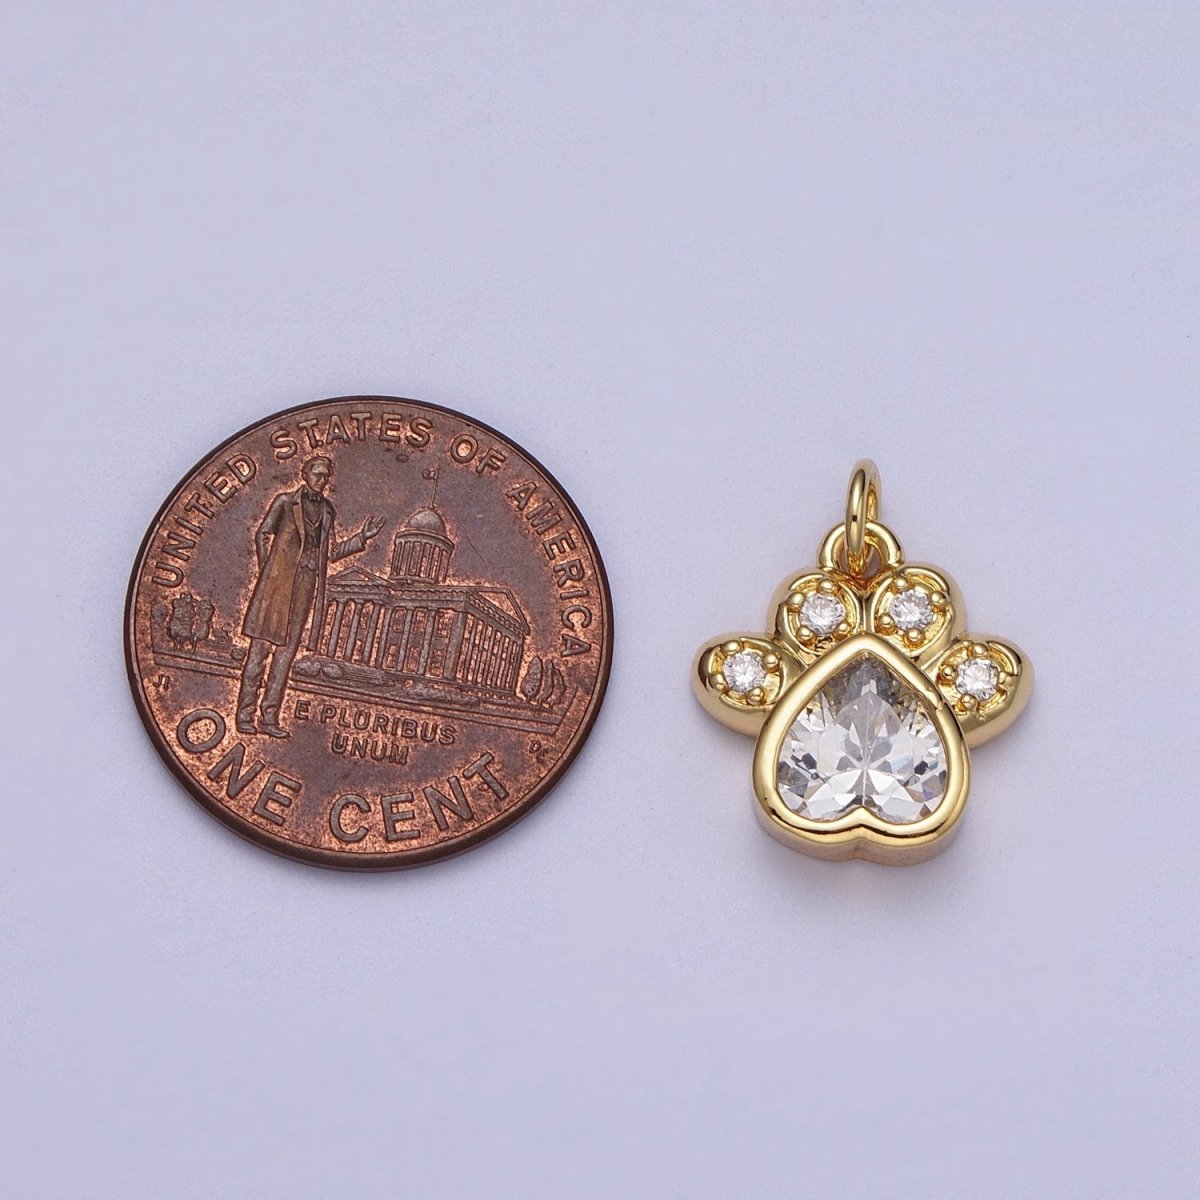 Cute Paw Print Clear Cubic Zirconia Gold Charm | C-170 - DLUXCA